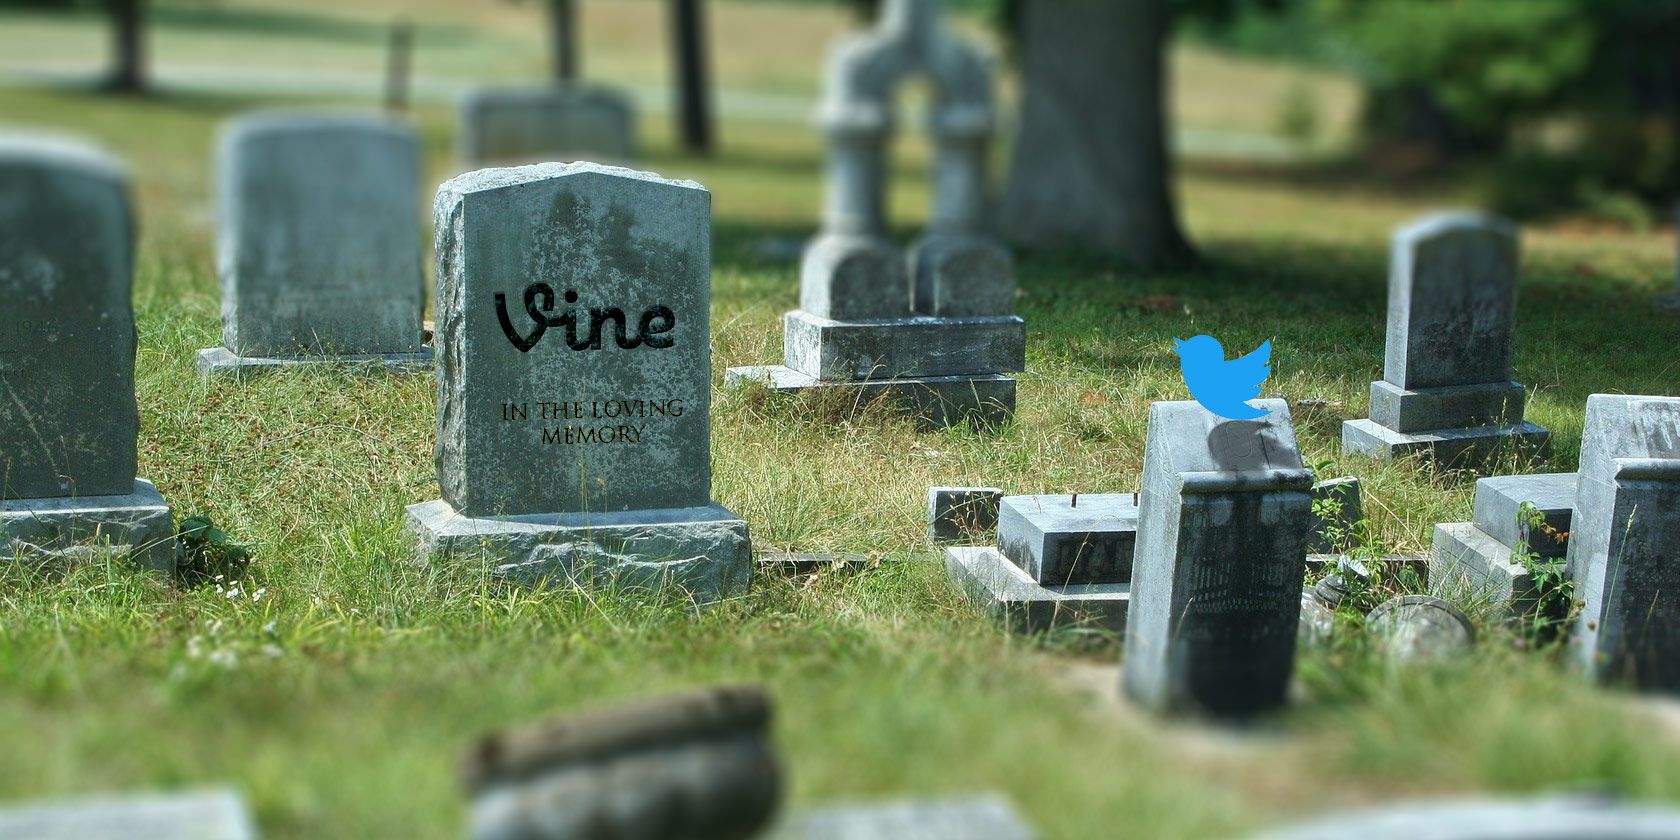 twitter-kills-off-vine